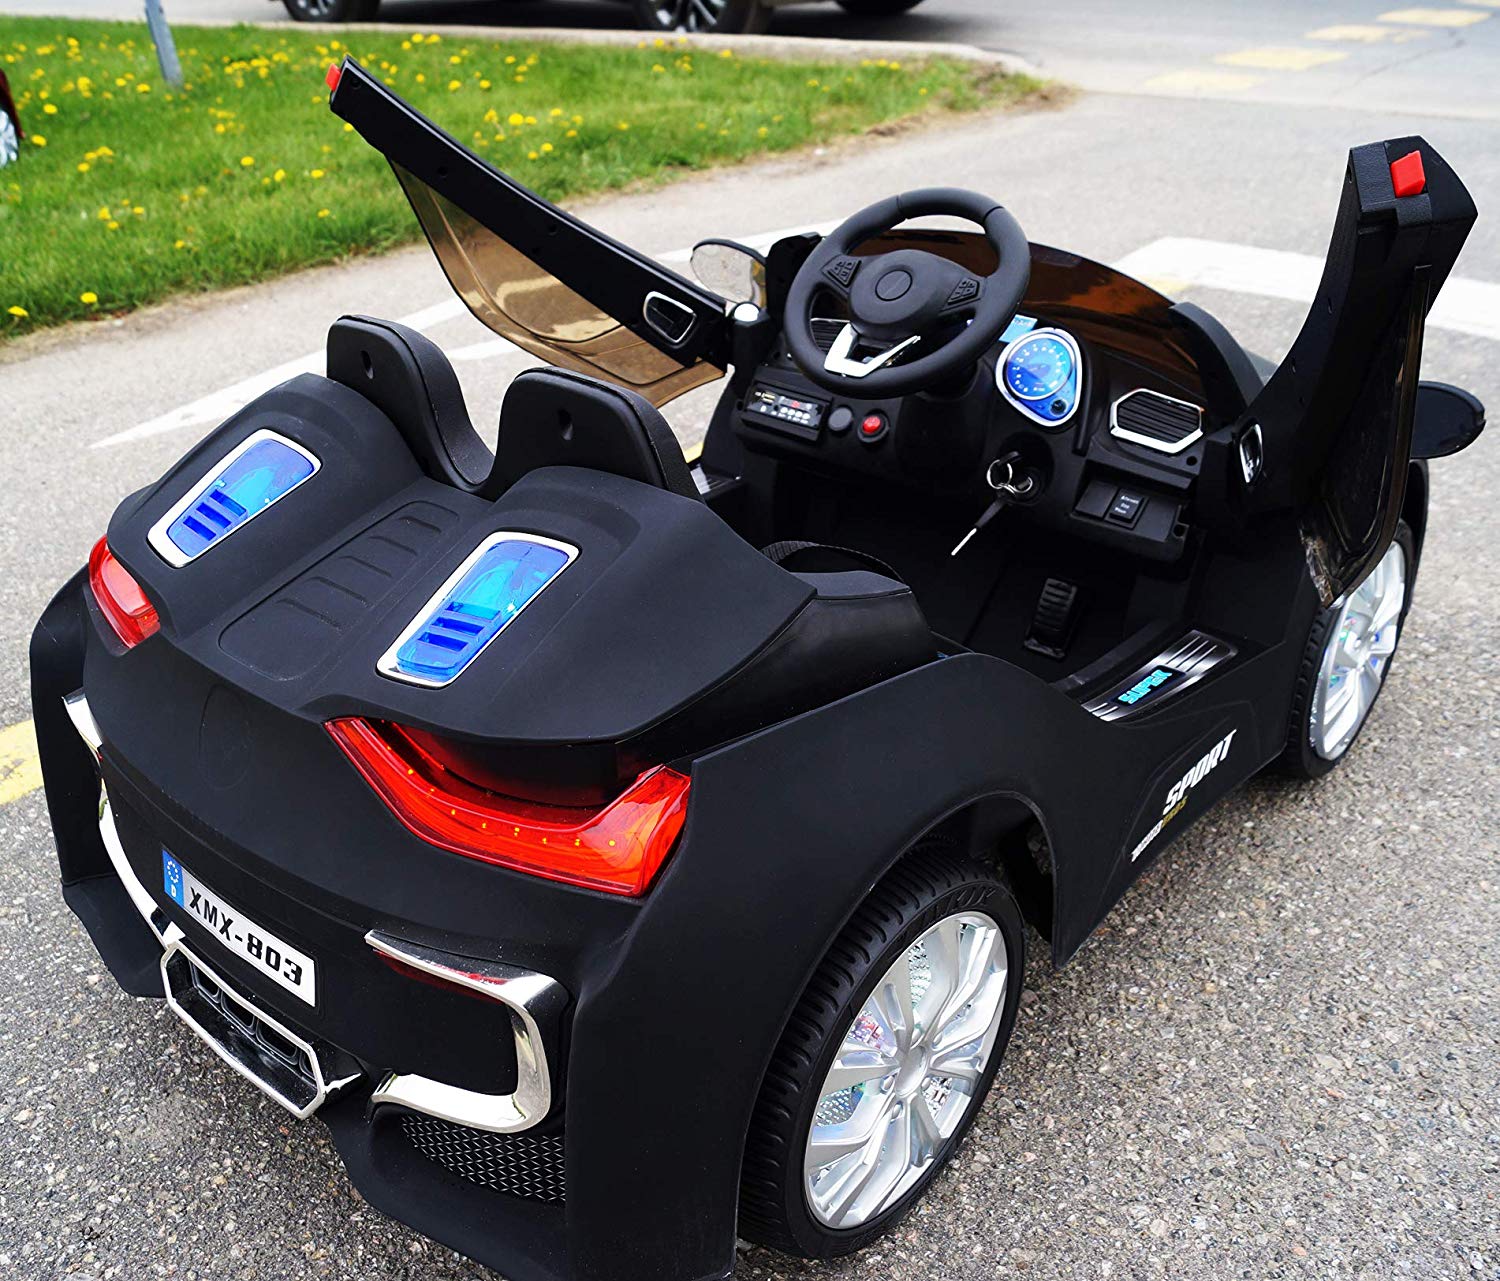 bmw i8 electric toy car